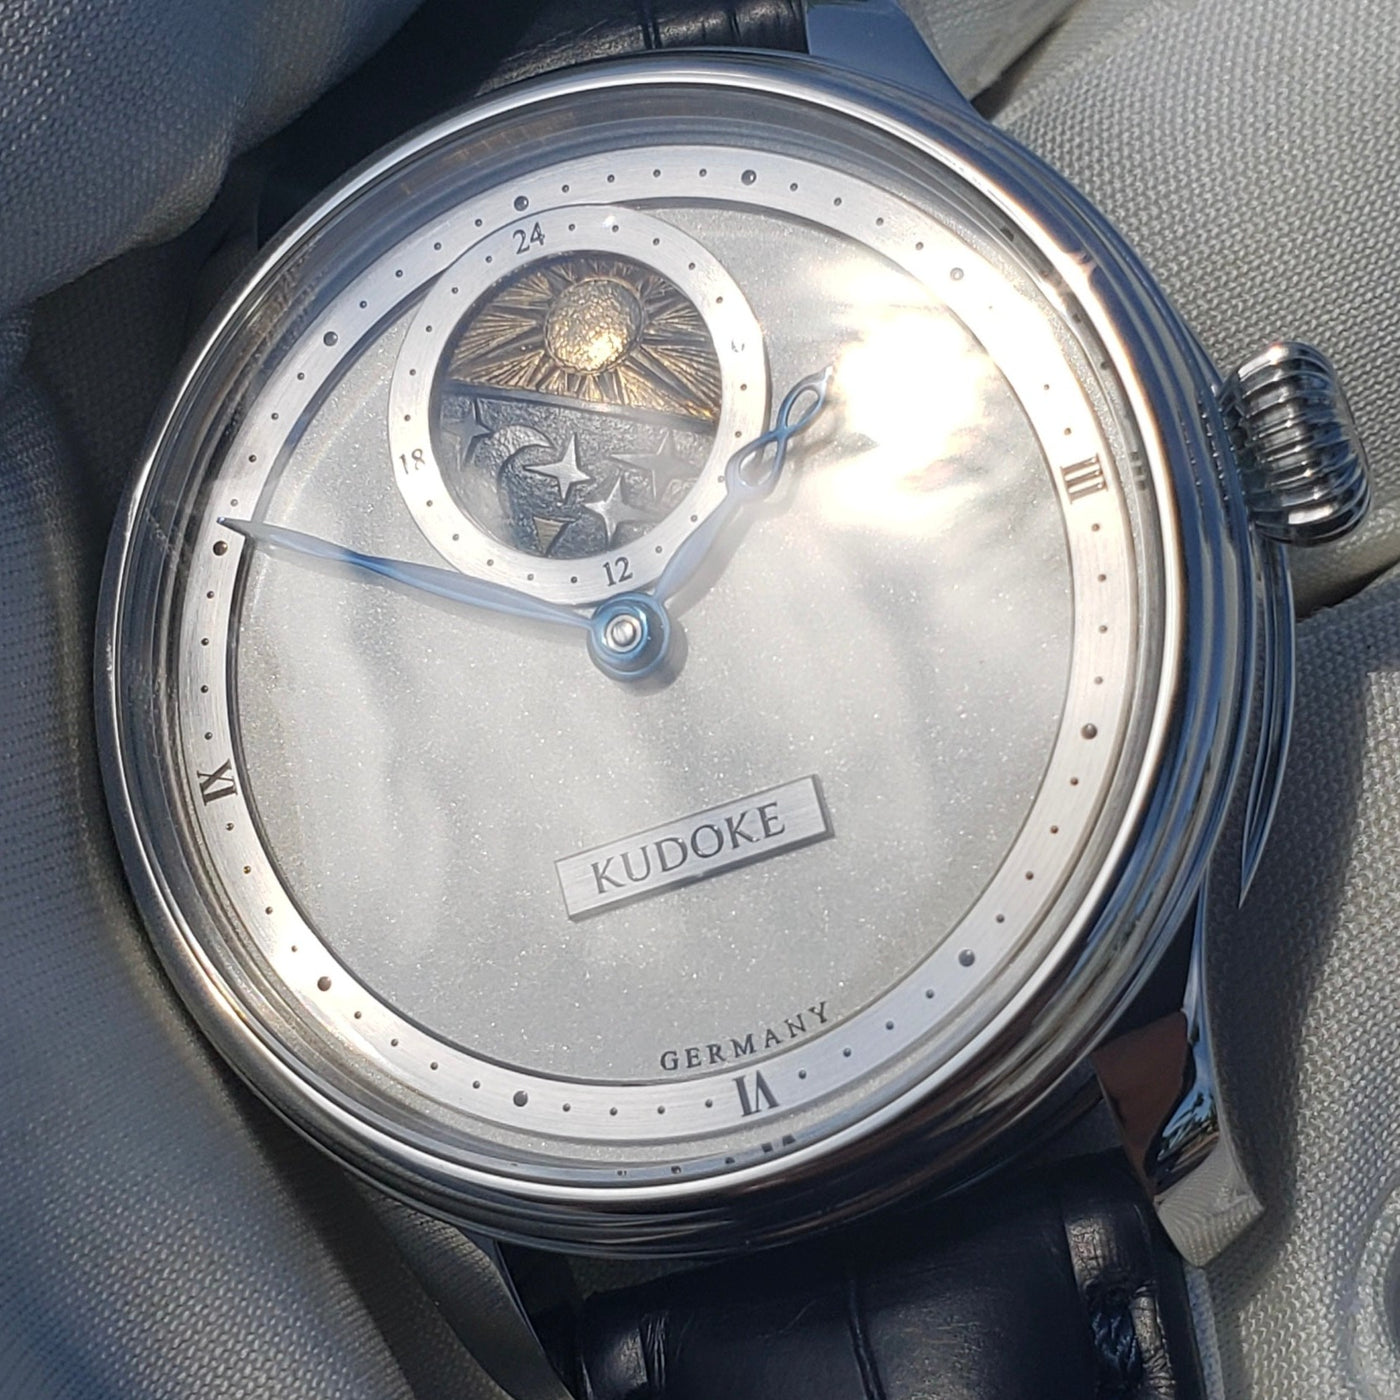 Kudoke 2 Bright Silver Dial Watch